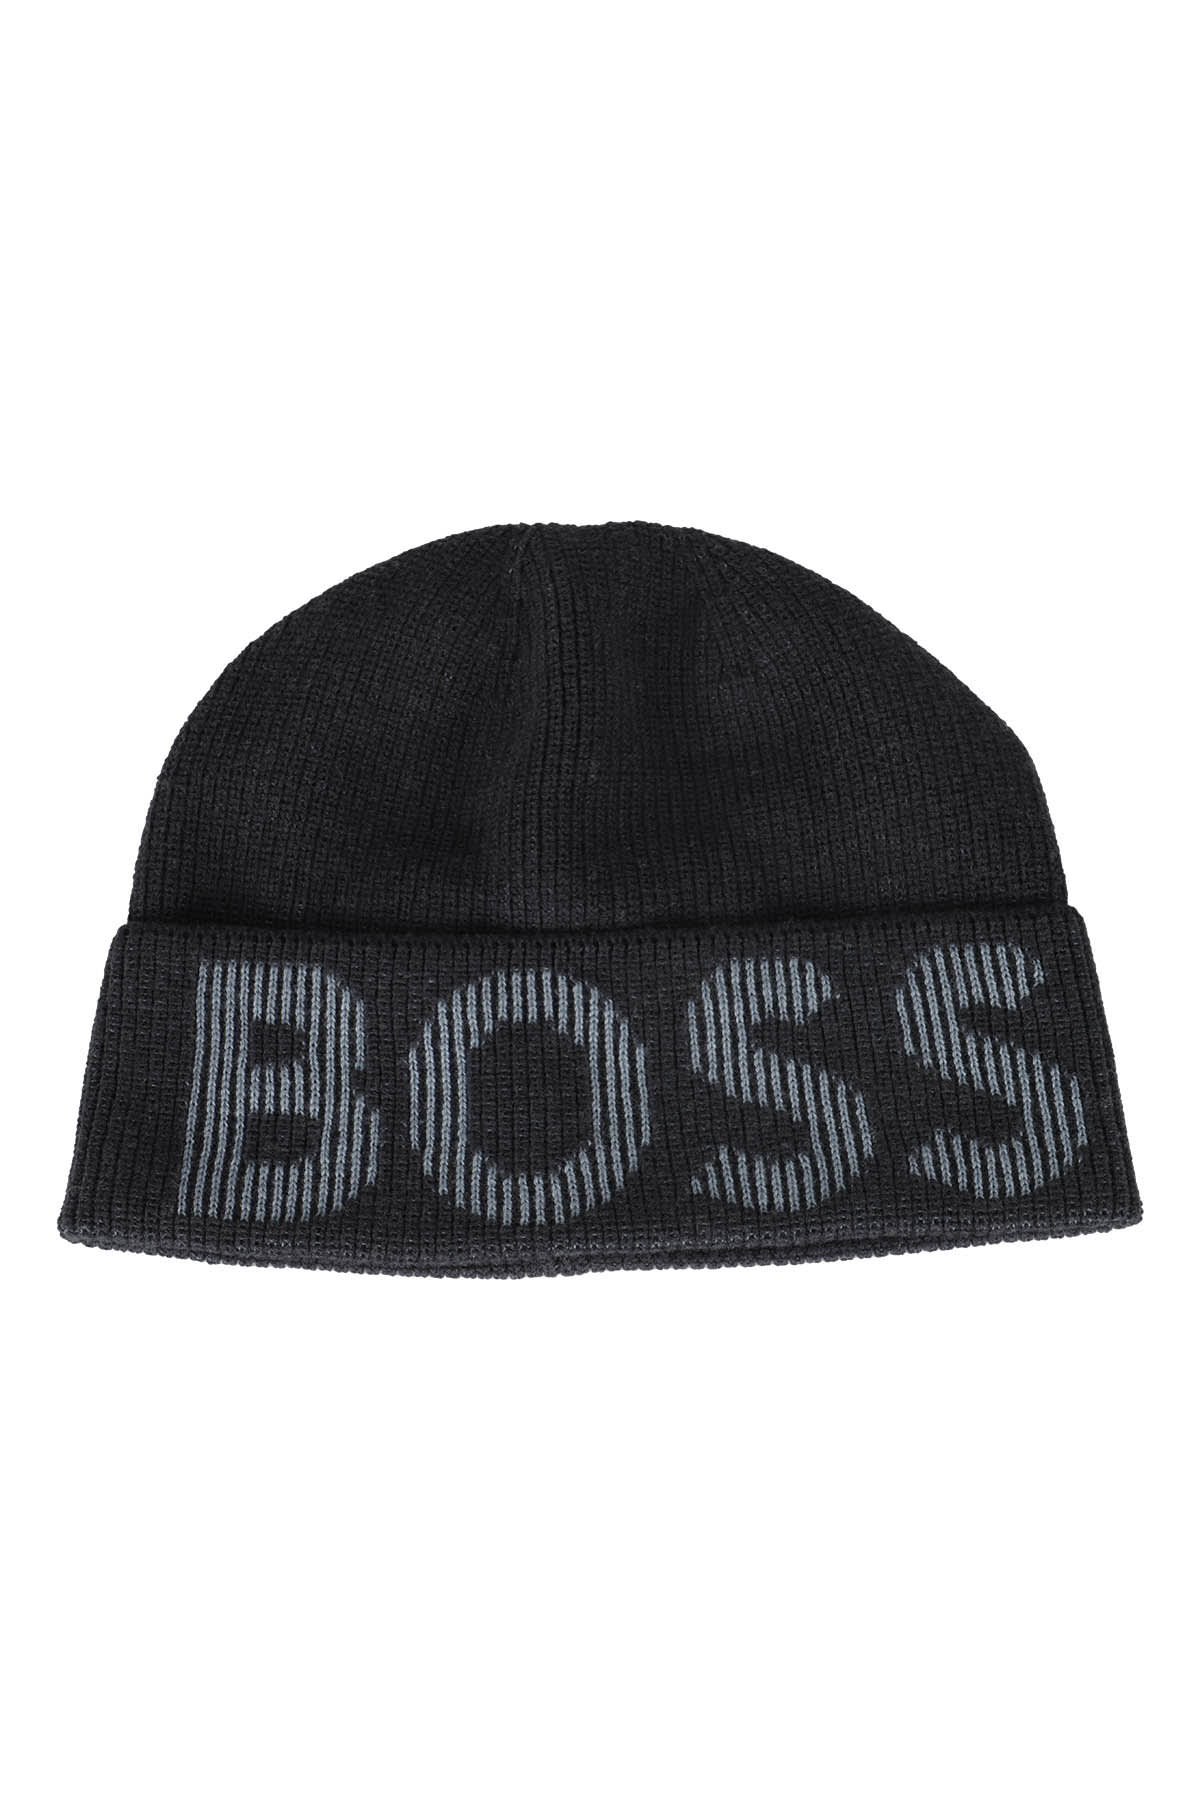 Hugo Boss Lamico Hat